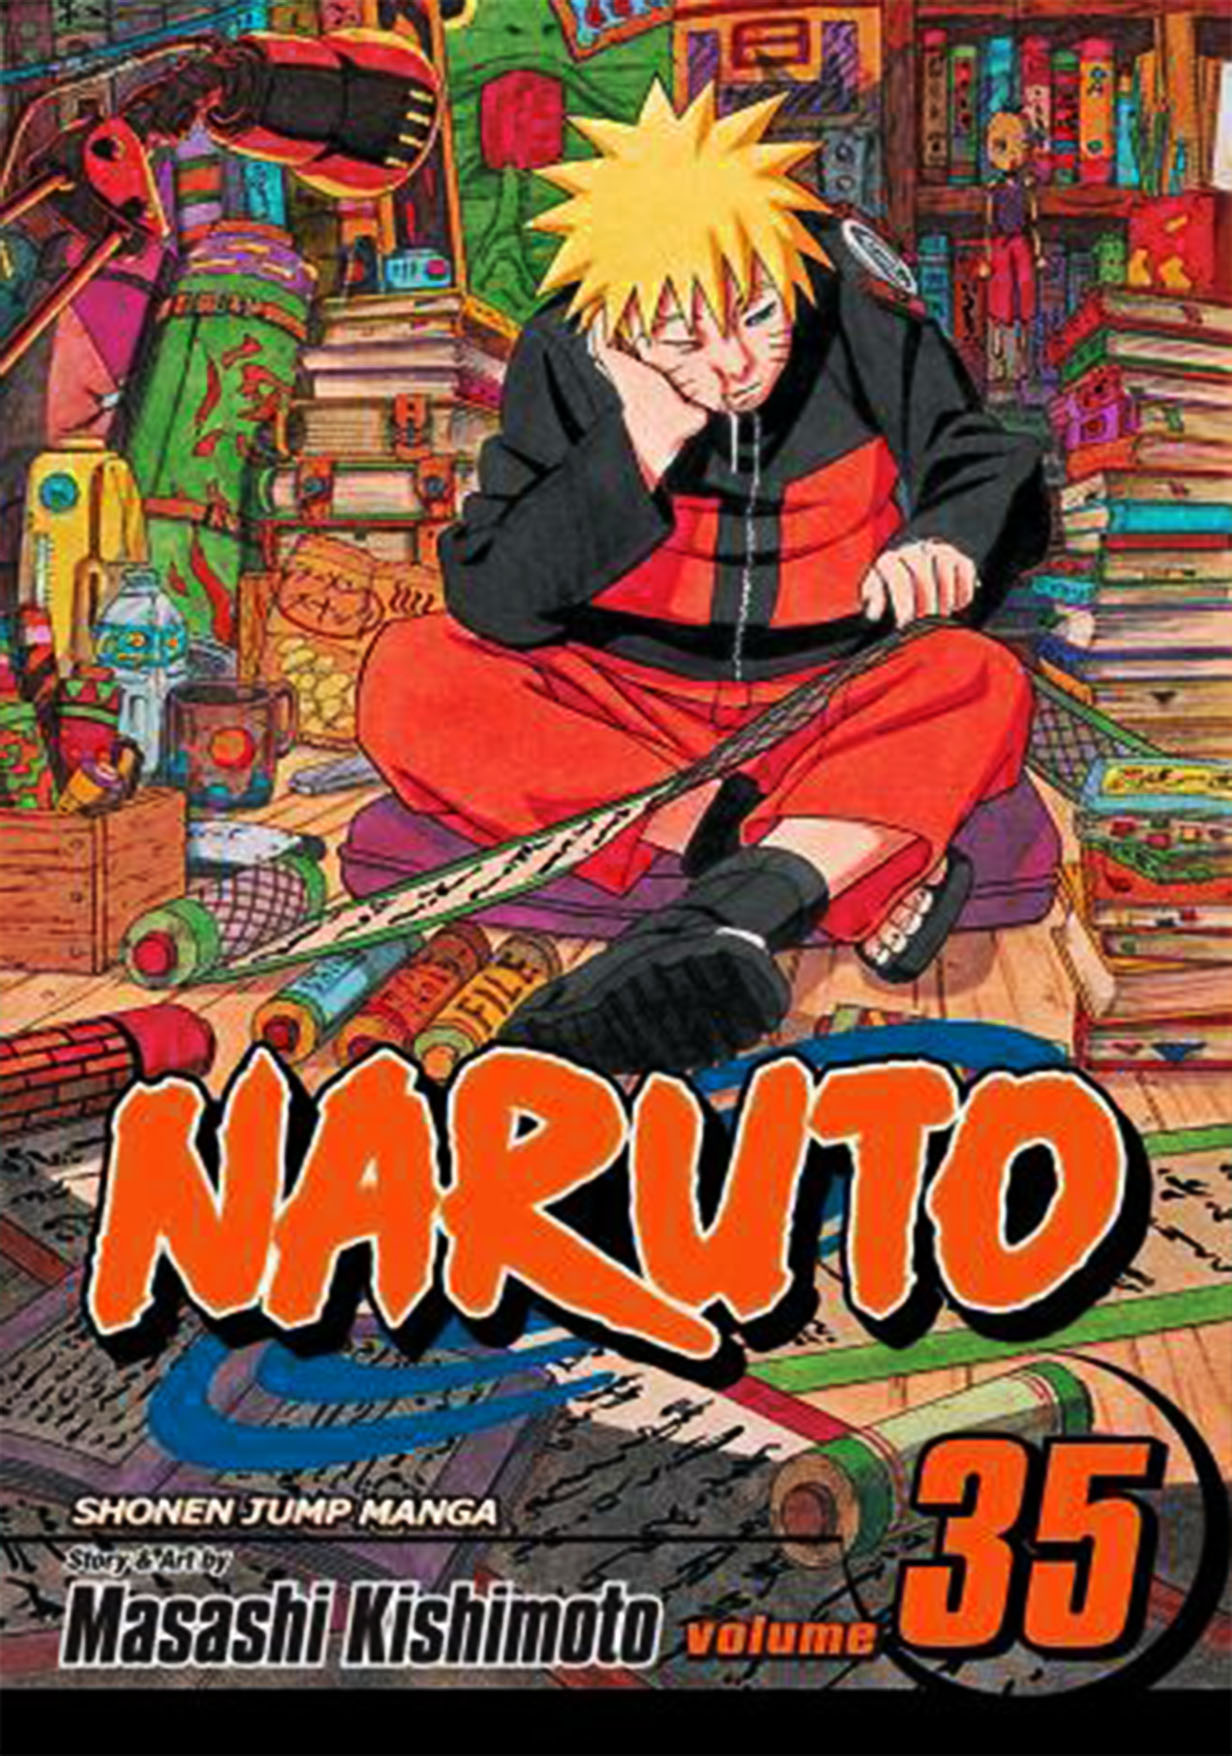 Naruto Vol. 35 - The New Two (পেপারব্যাক)